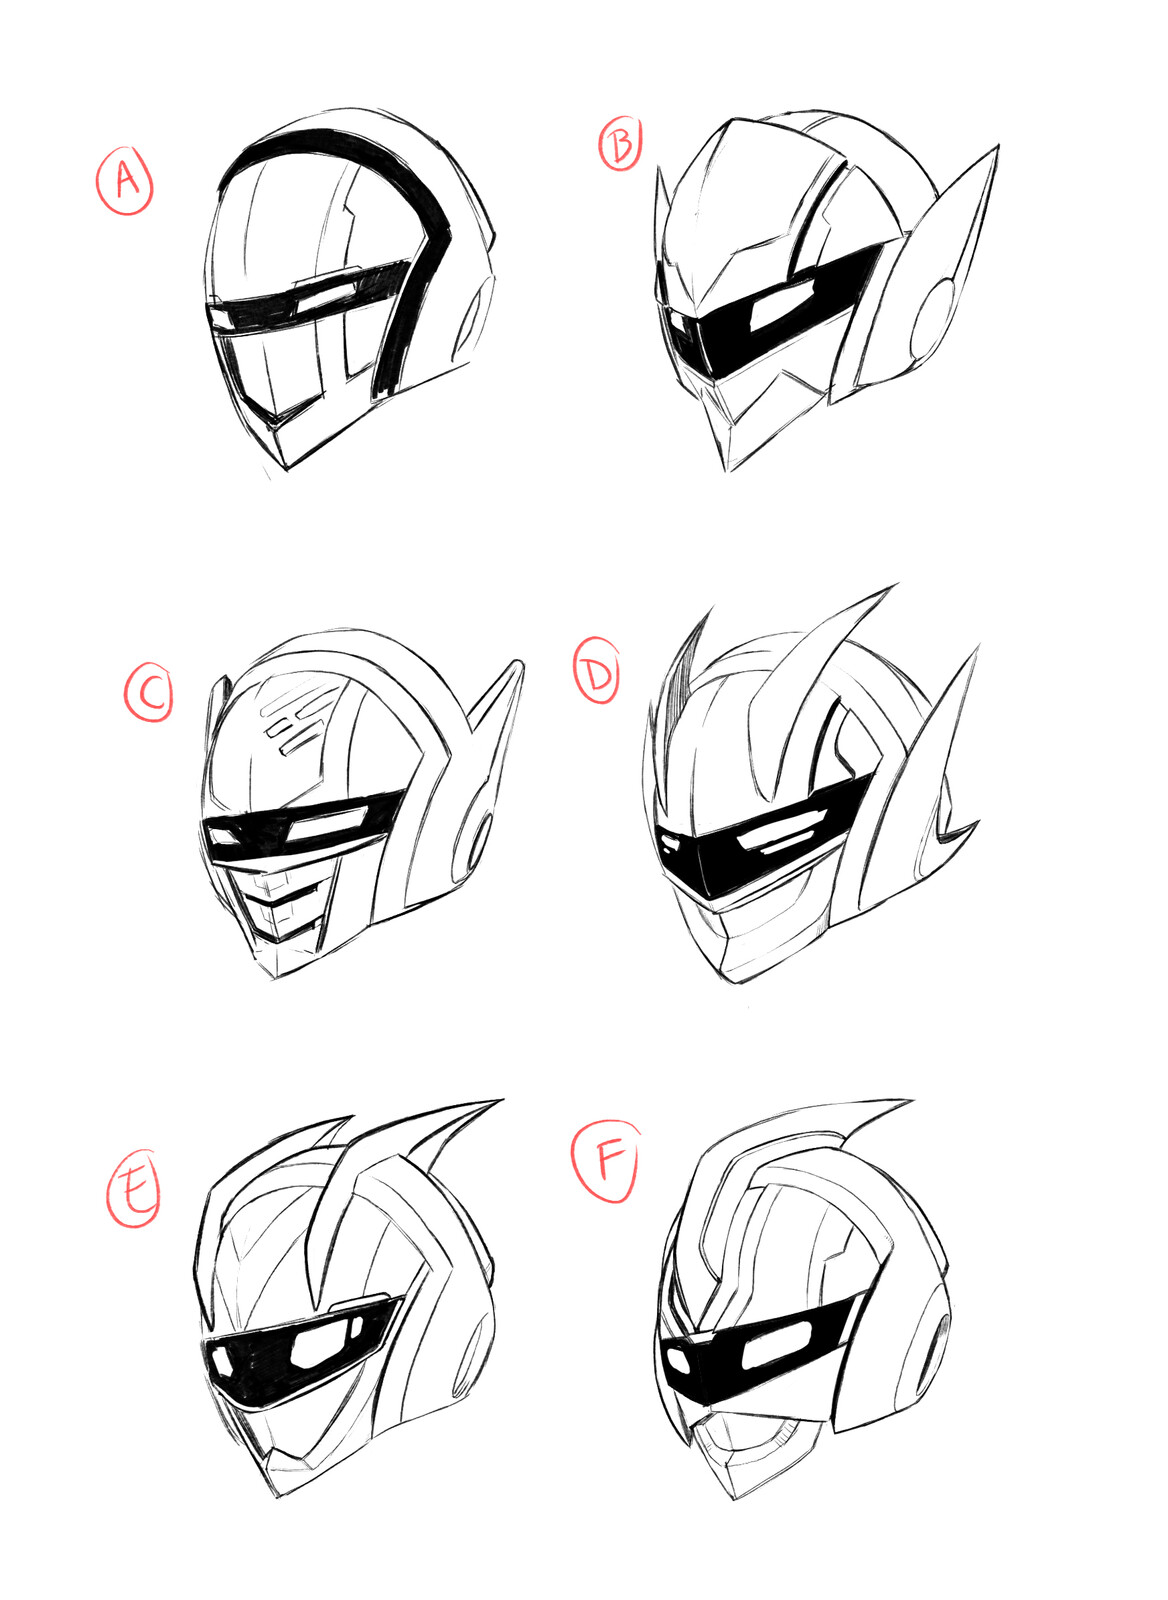 Initial helmet sketches